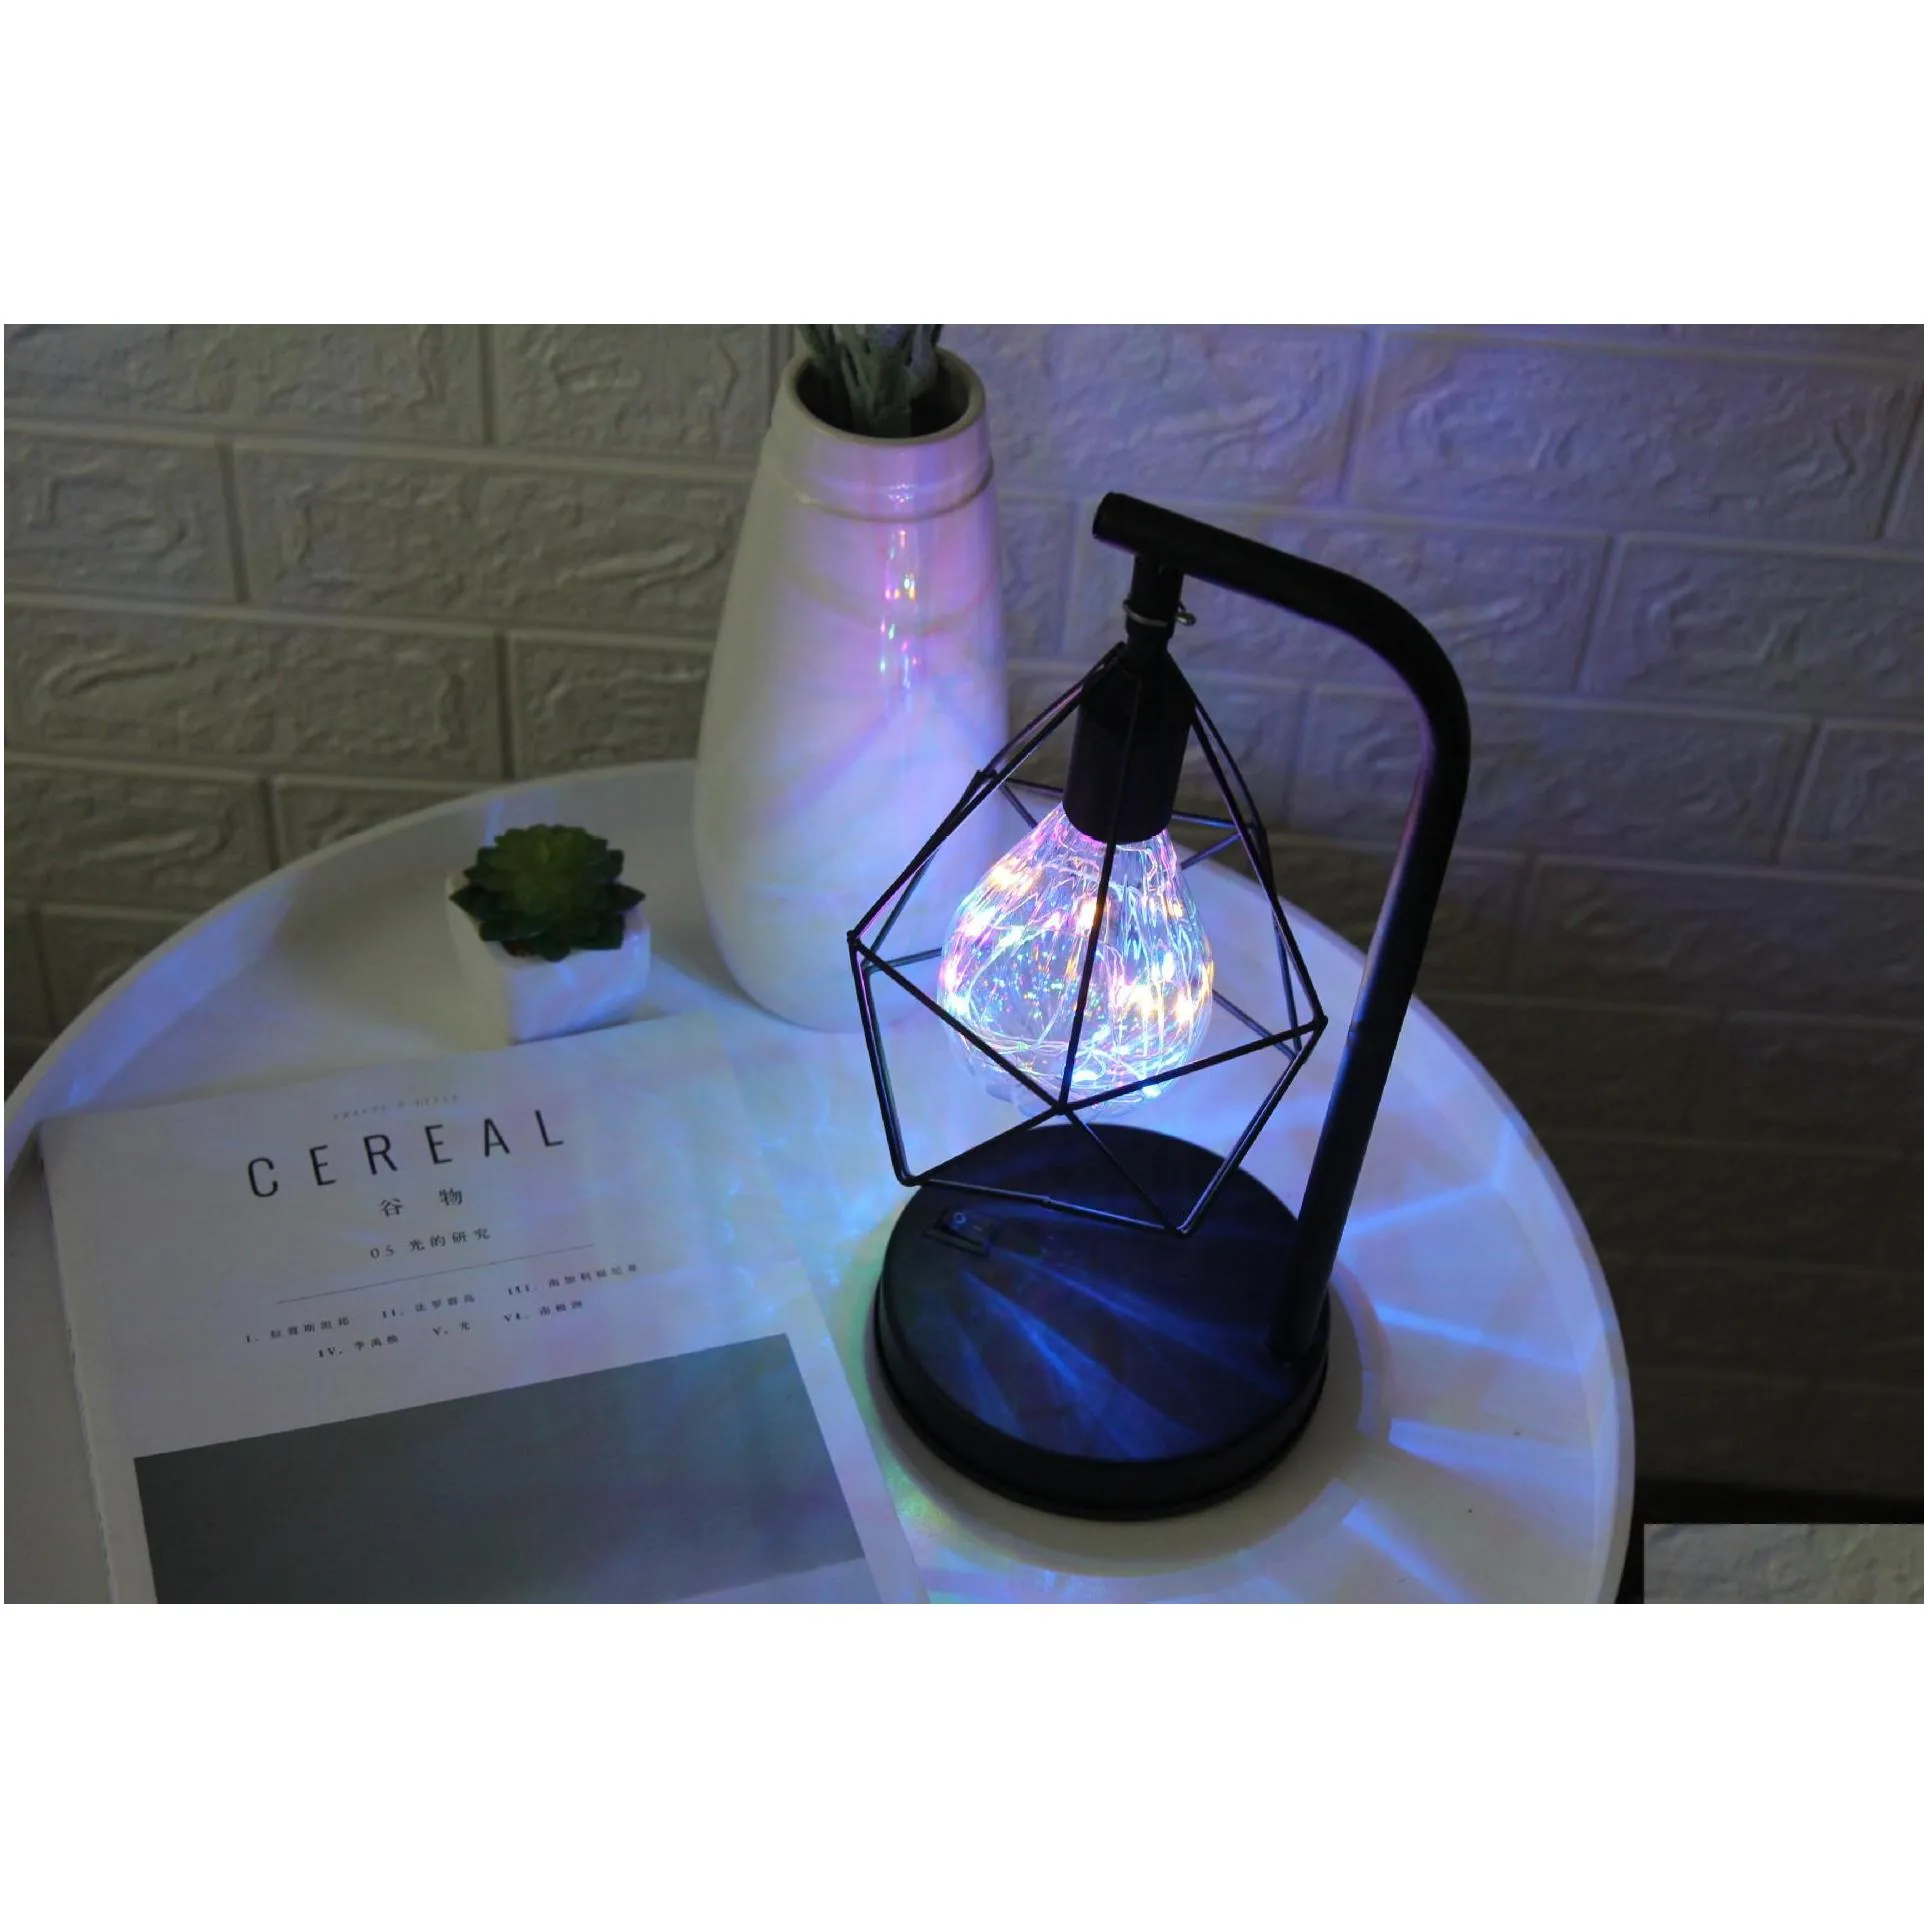 creative holiday retro iron art minimalist hollow diamond table lamps reading lamp night light bedroom desk lighting